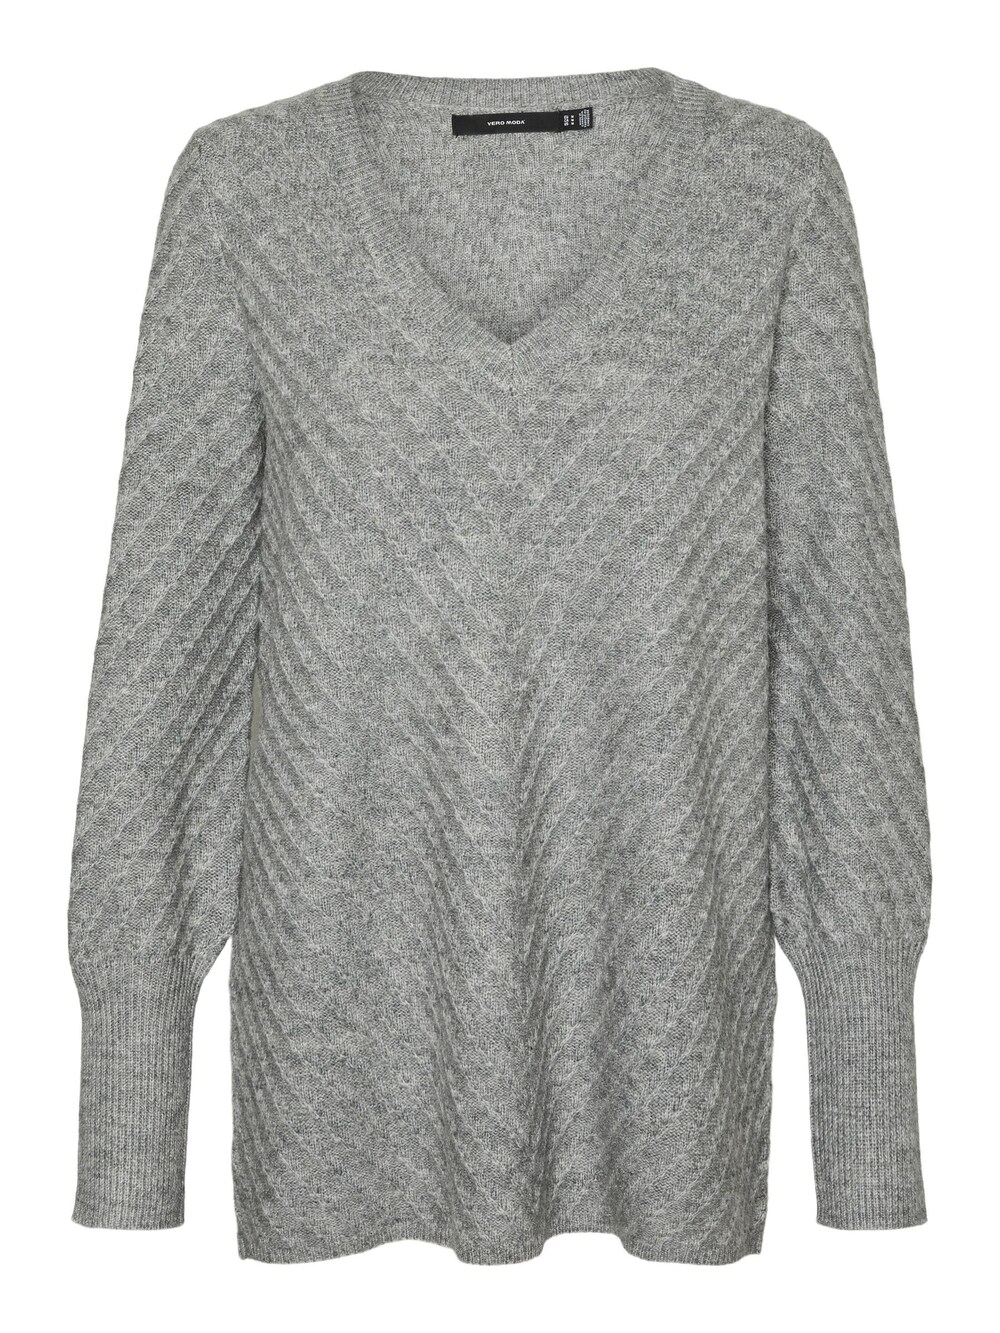 Свитер Vero Moda, серый свитер vero moda priya базальтовый серый